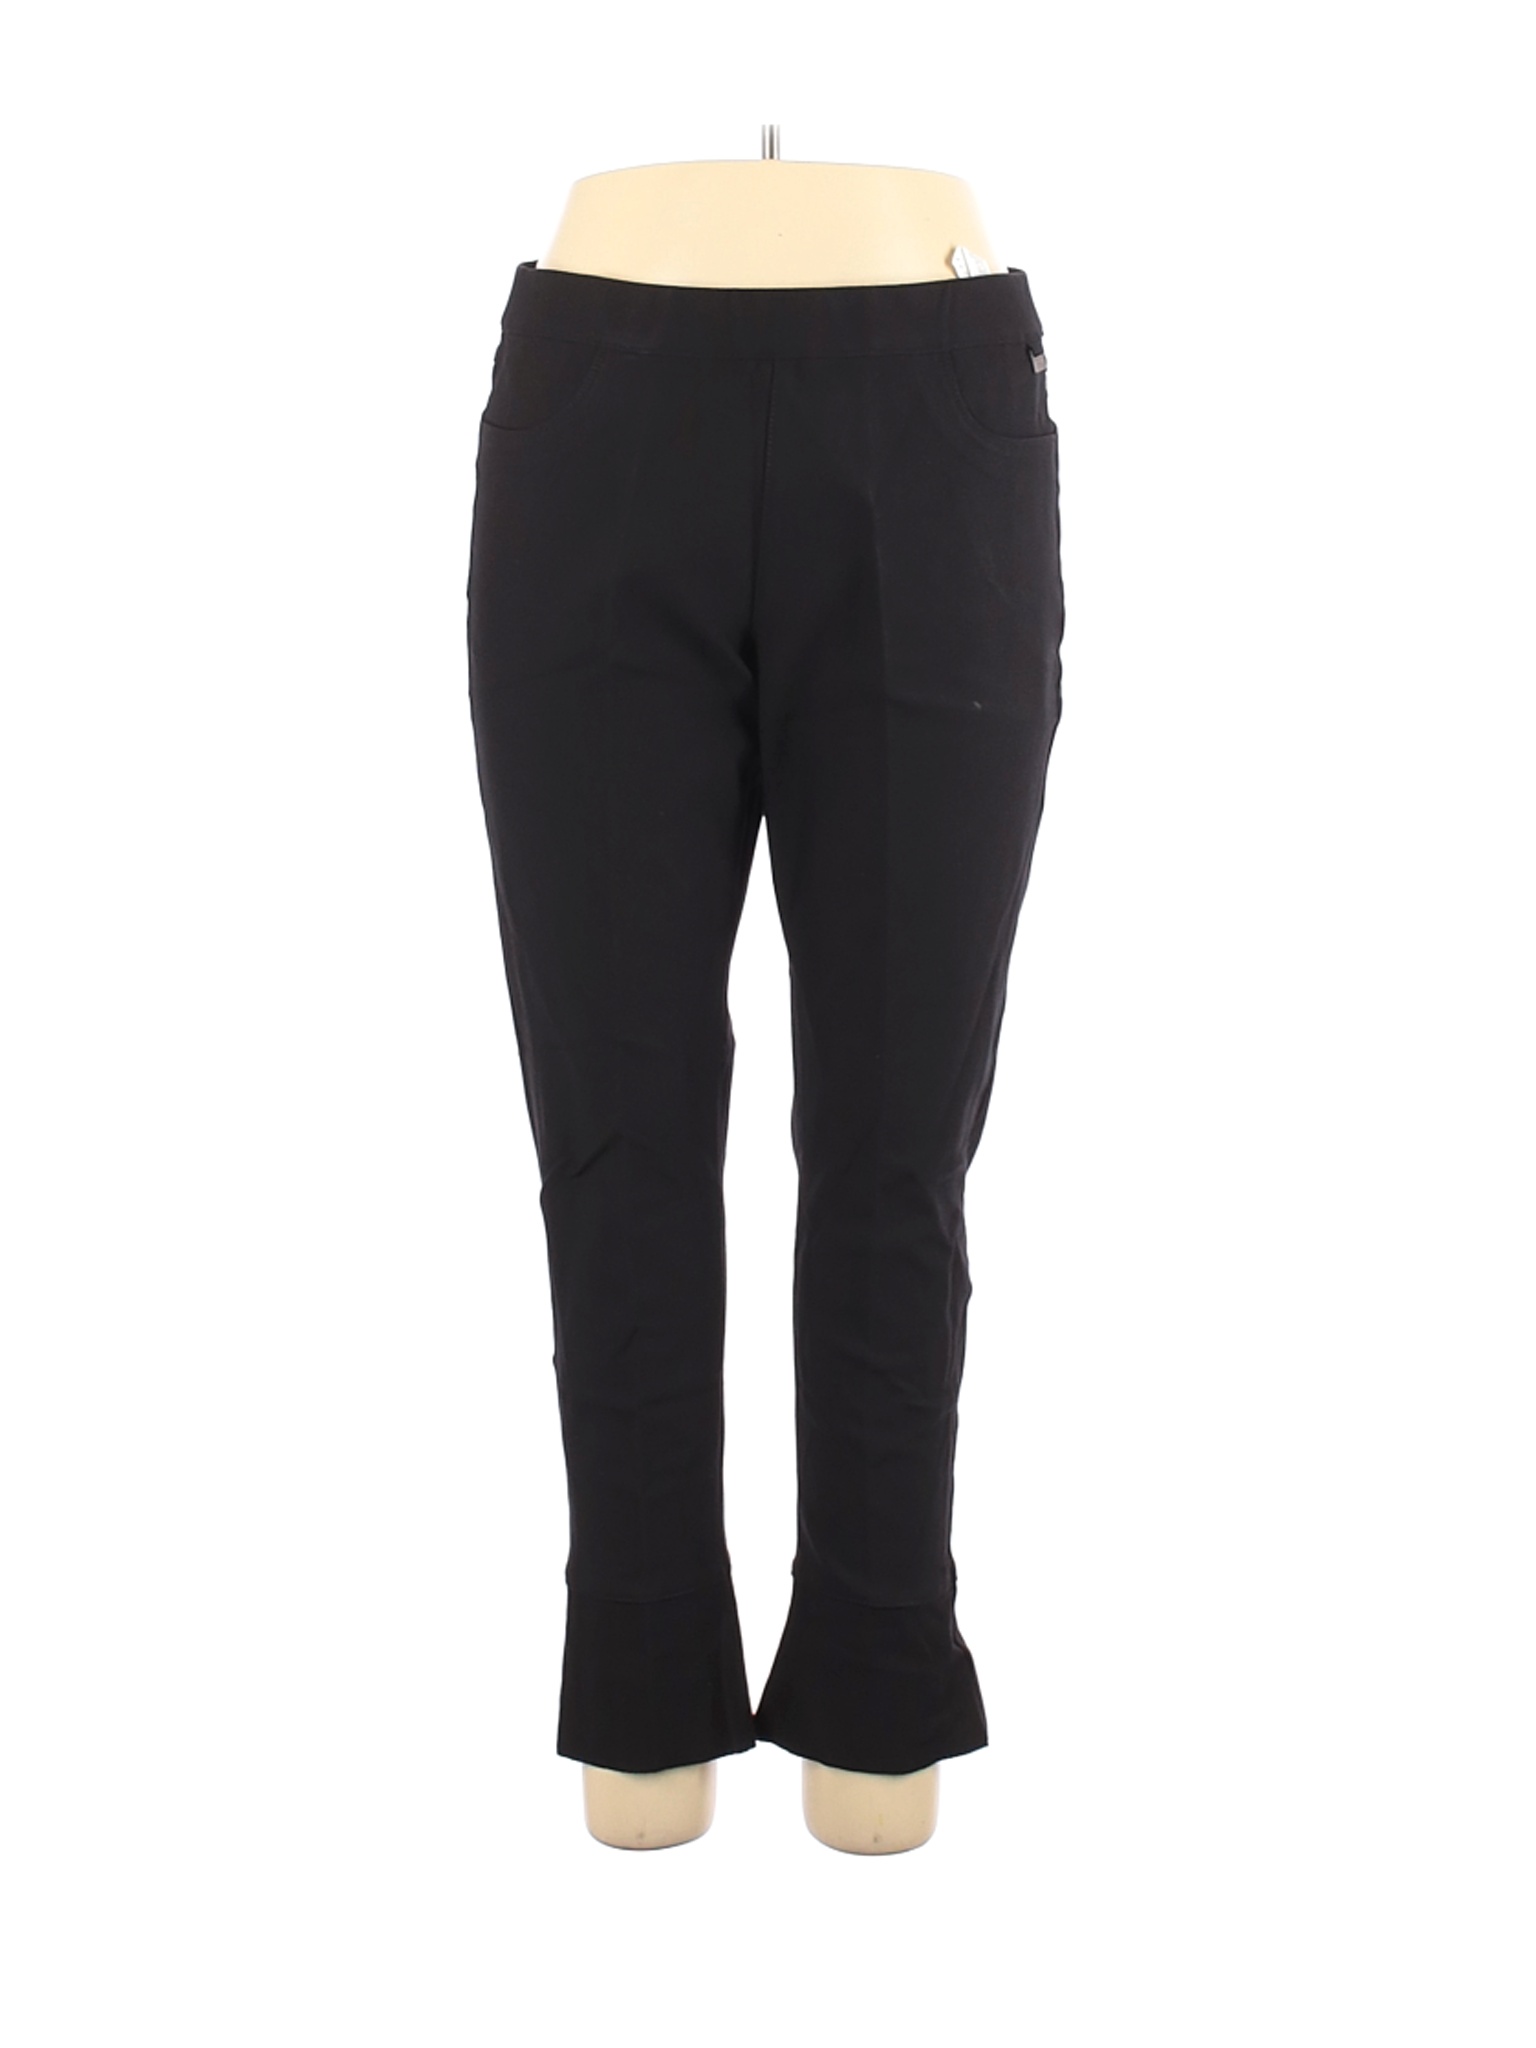 NWT FDJ Women Black Casual Pants 16 | eBay